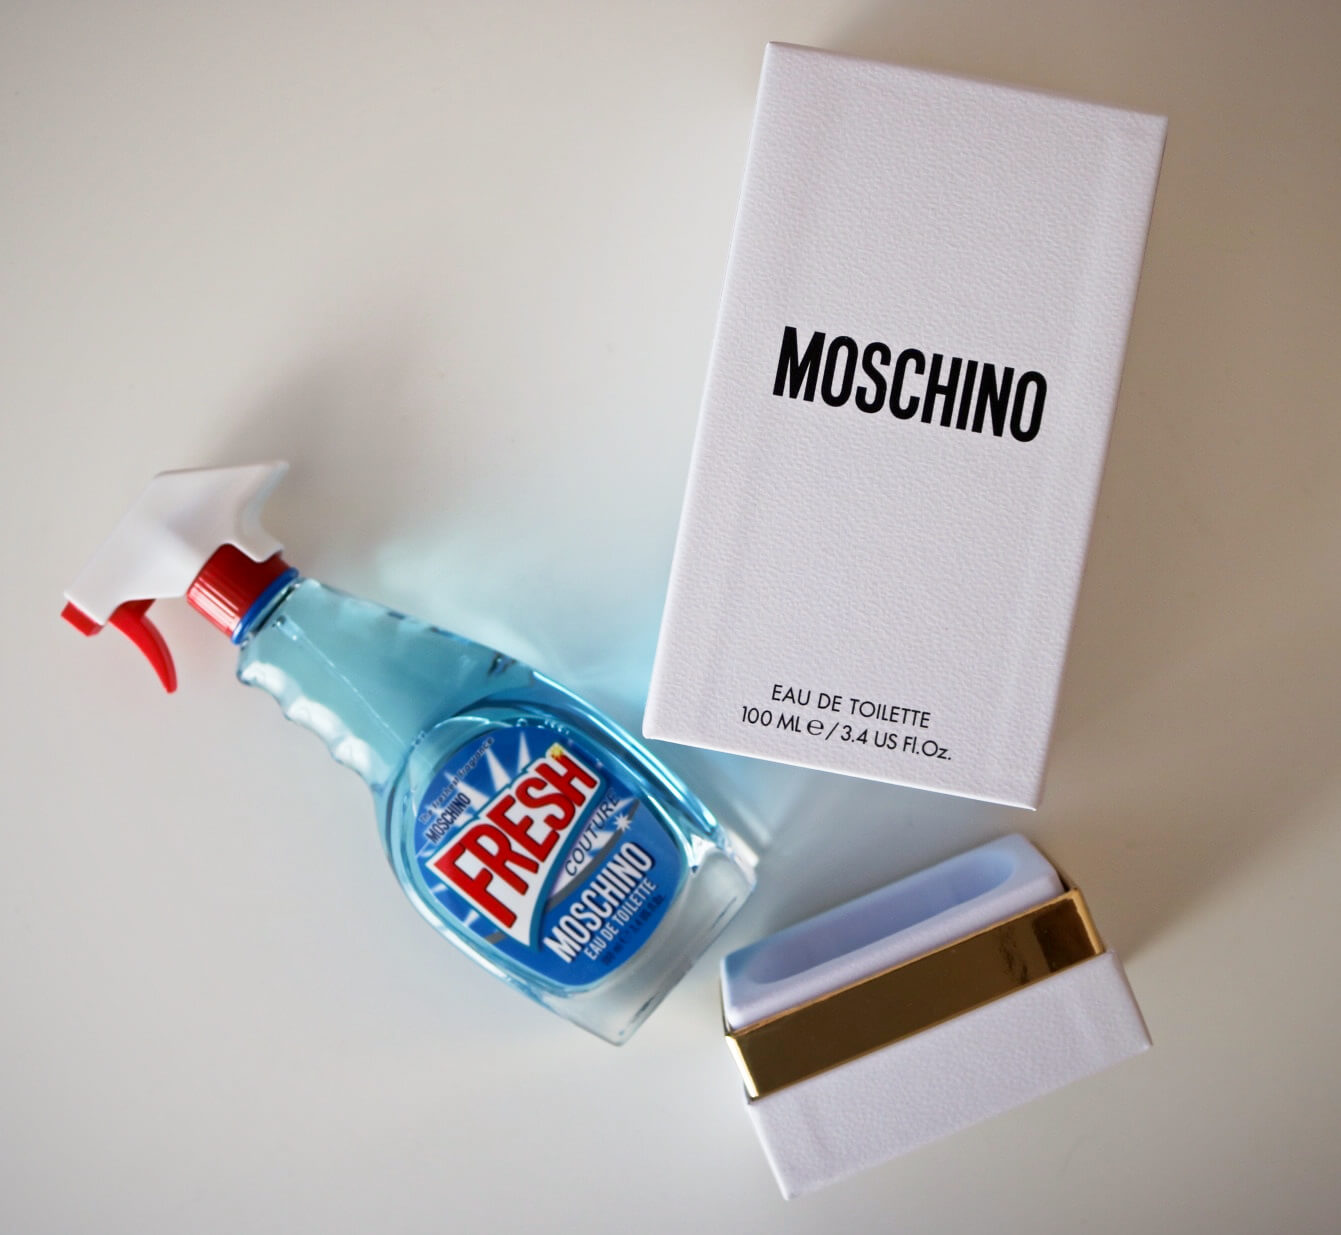 Moschino, Fresh Couture Eau De Toilette 5ml, น้ำหอมMoschino, น้ำหอมขวดน้ำยาทำความสะอาด